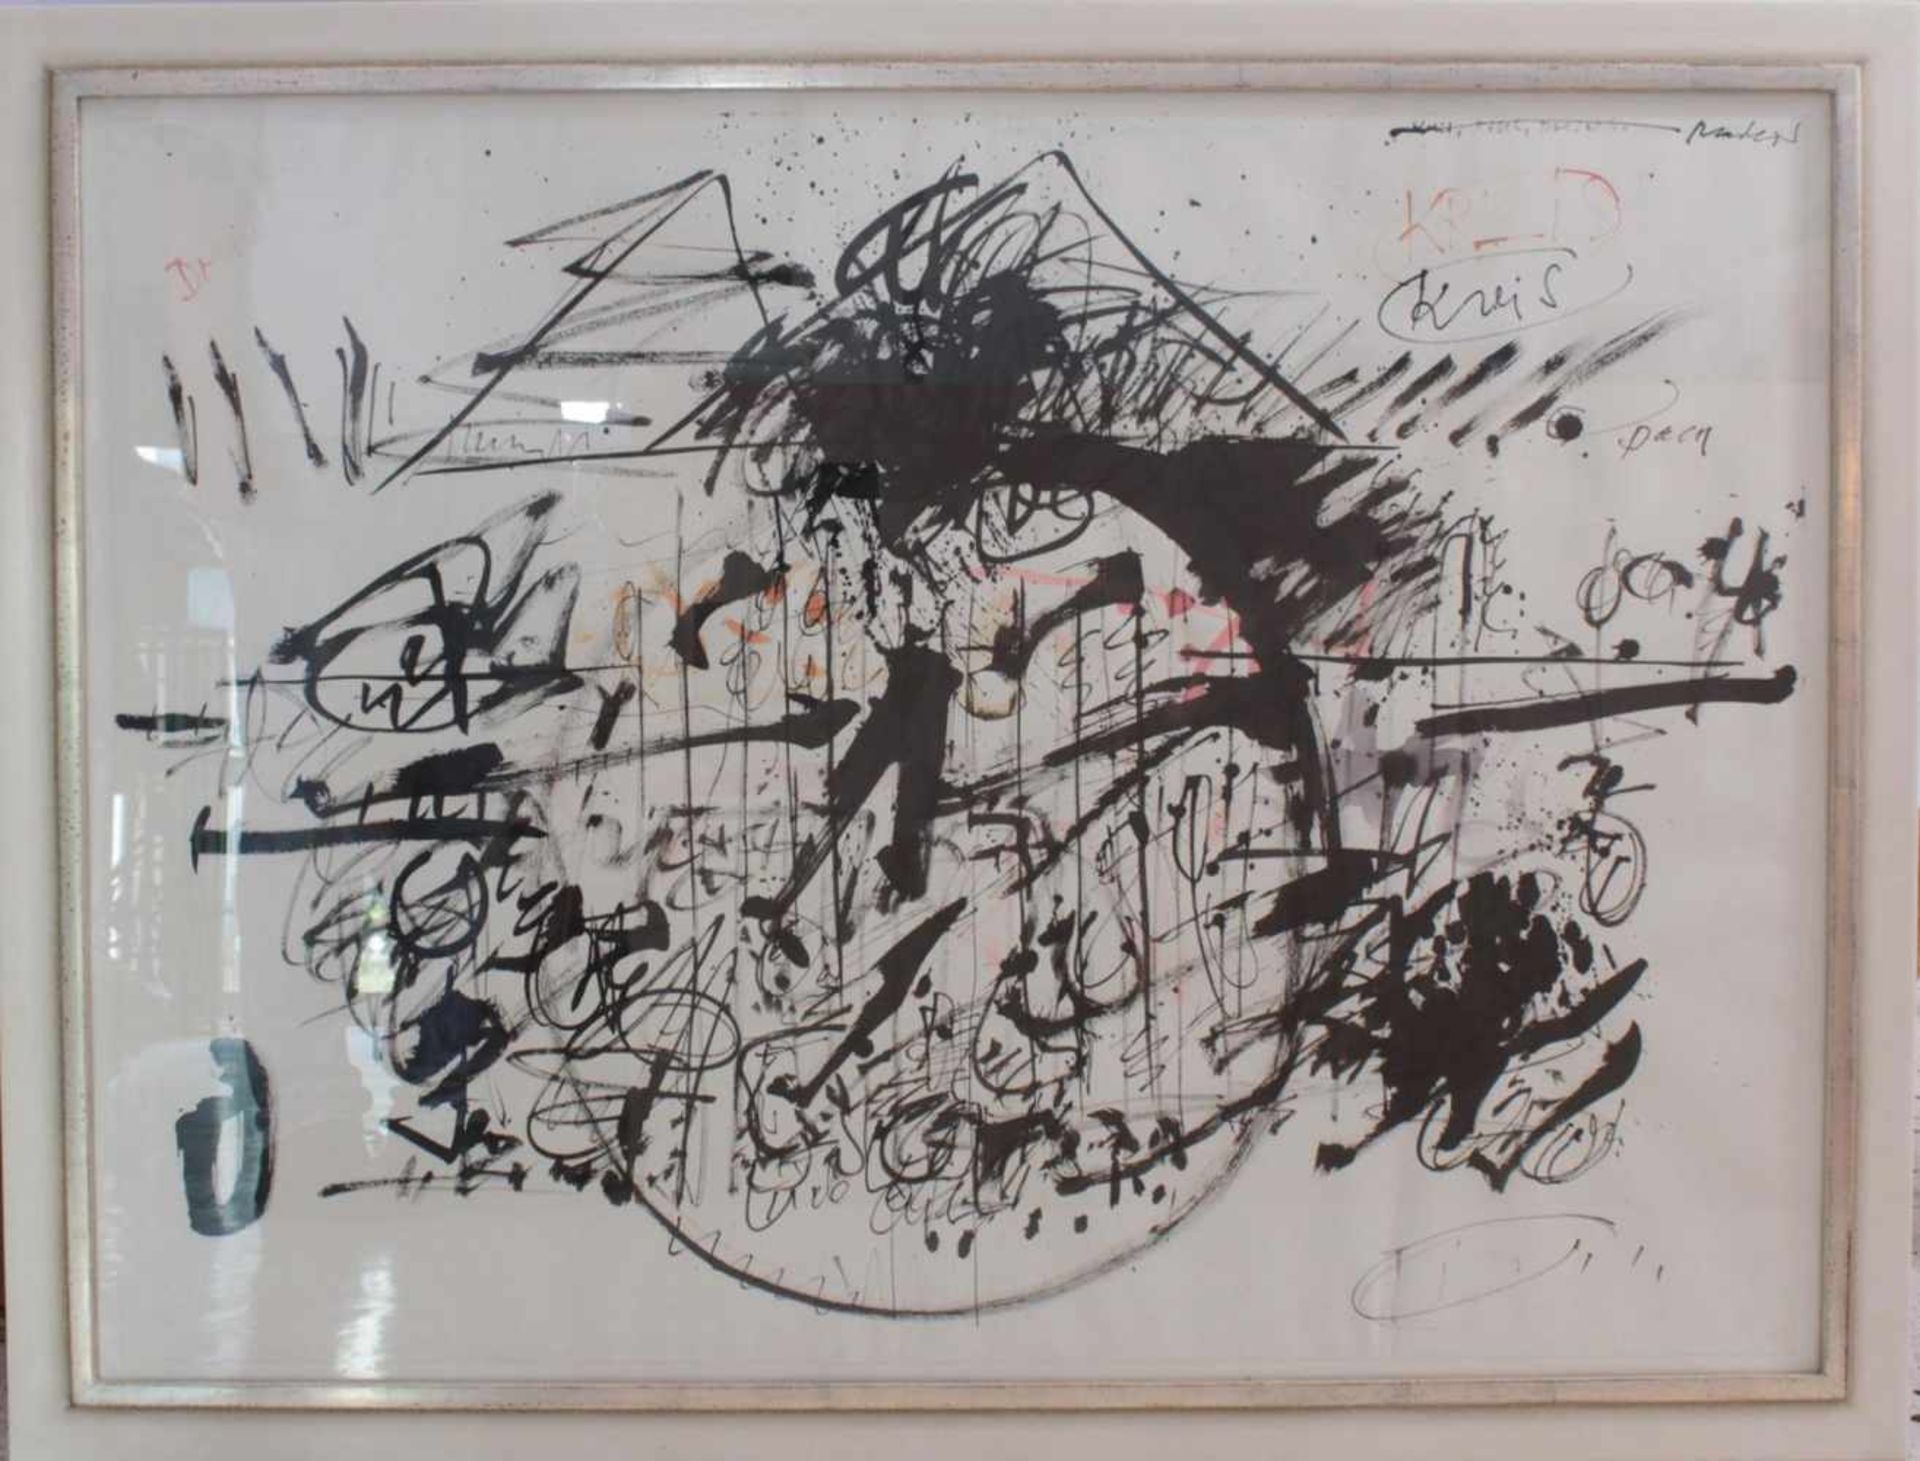 Frank Gyjho (1954)Farbserigraphie, "Kreis", ca. 77 x 106 cm. Gerahmt, ca. 120 x 92  cm